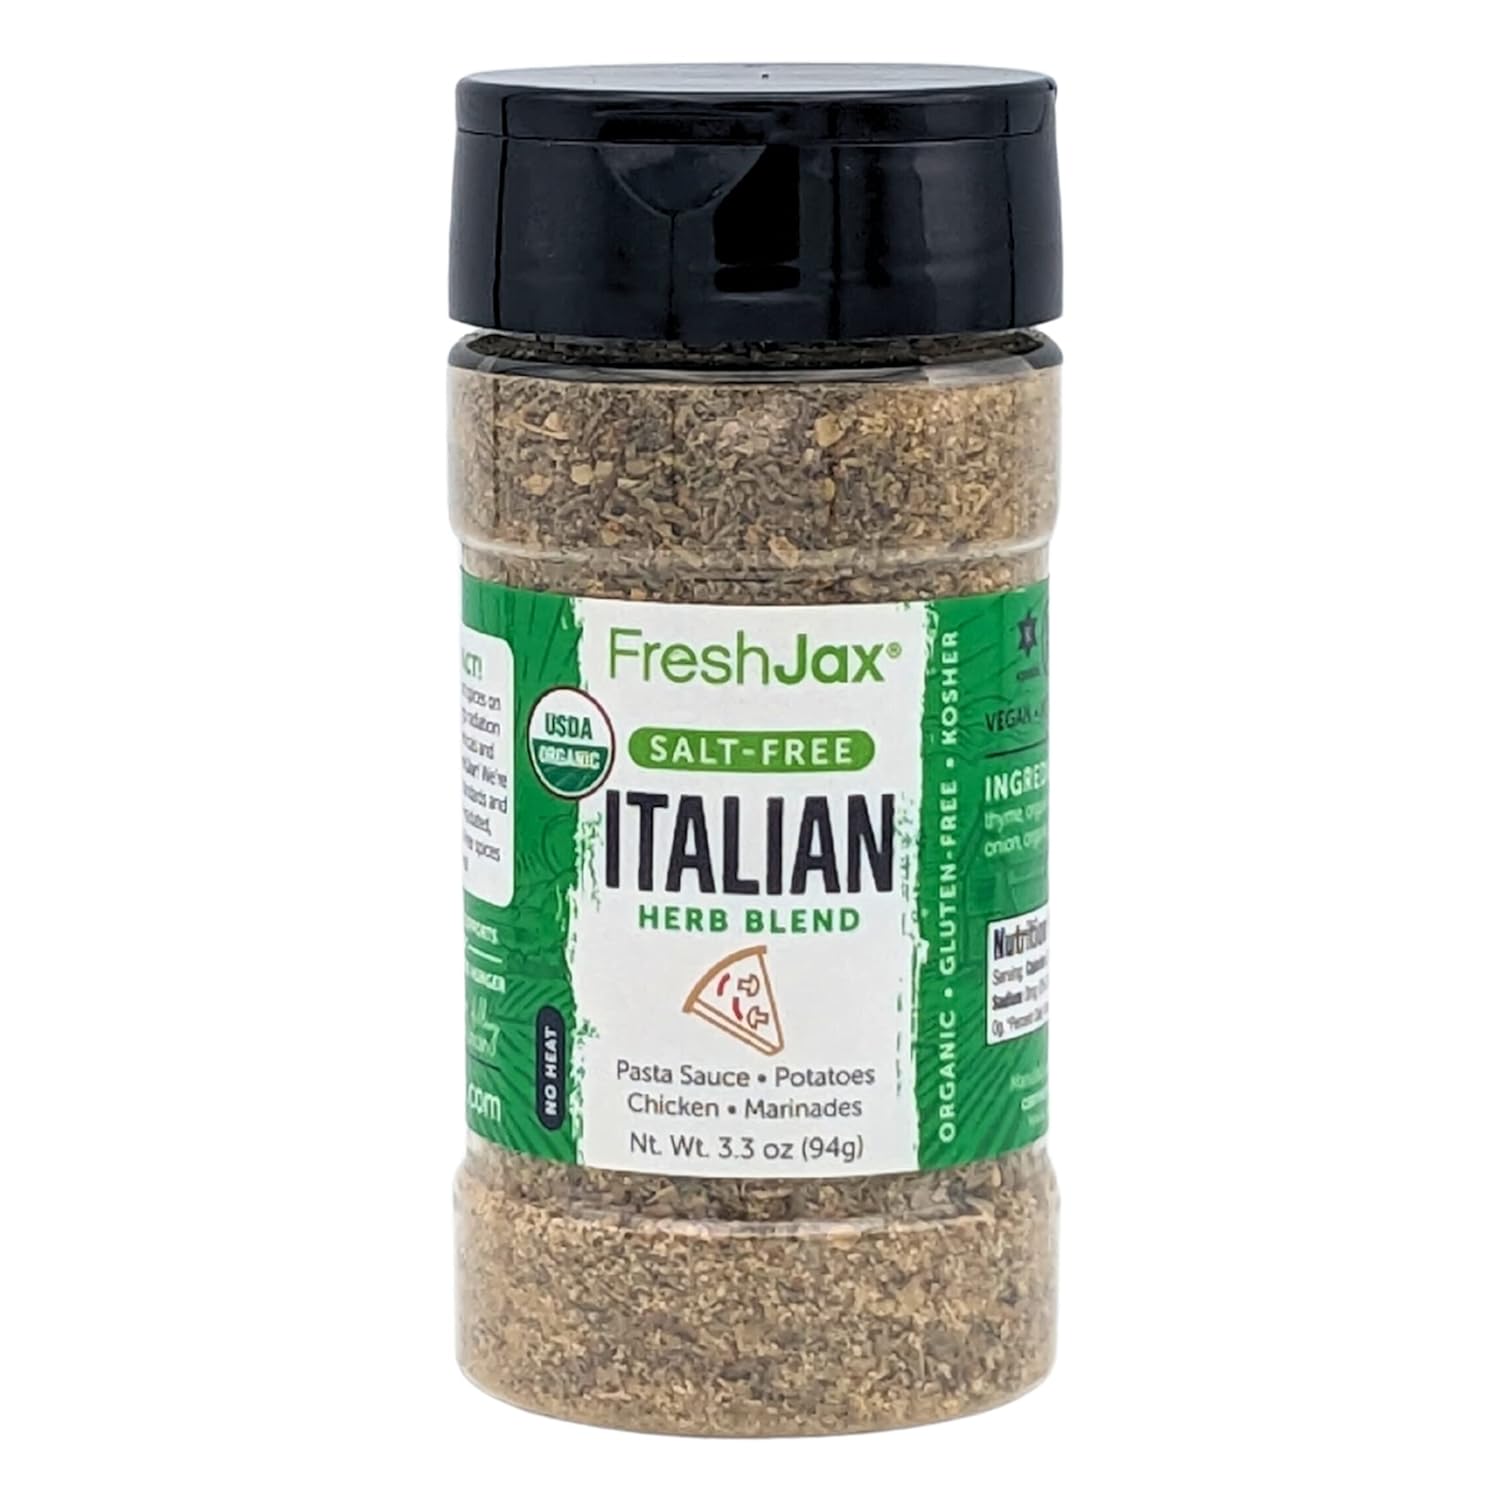 FreshJax Organic Italian Seasoning Blend Salt Free (3.3 oz Bottle) Non GMO, Gluten Free, Keto, Paleo, No Preservatives Italian Herb Blend for Bread Dip, Baking, Pasta | Handcrafted in Jacksonville